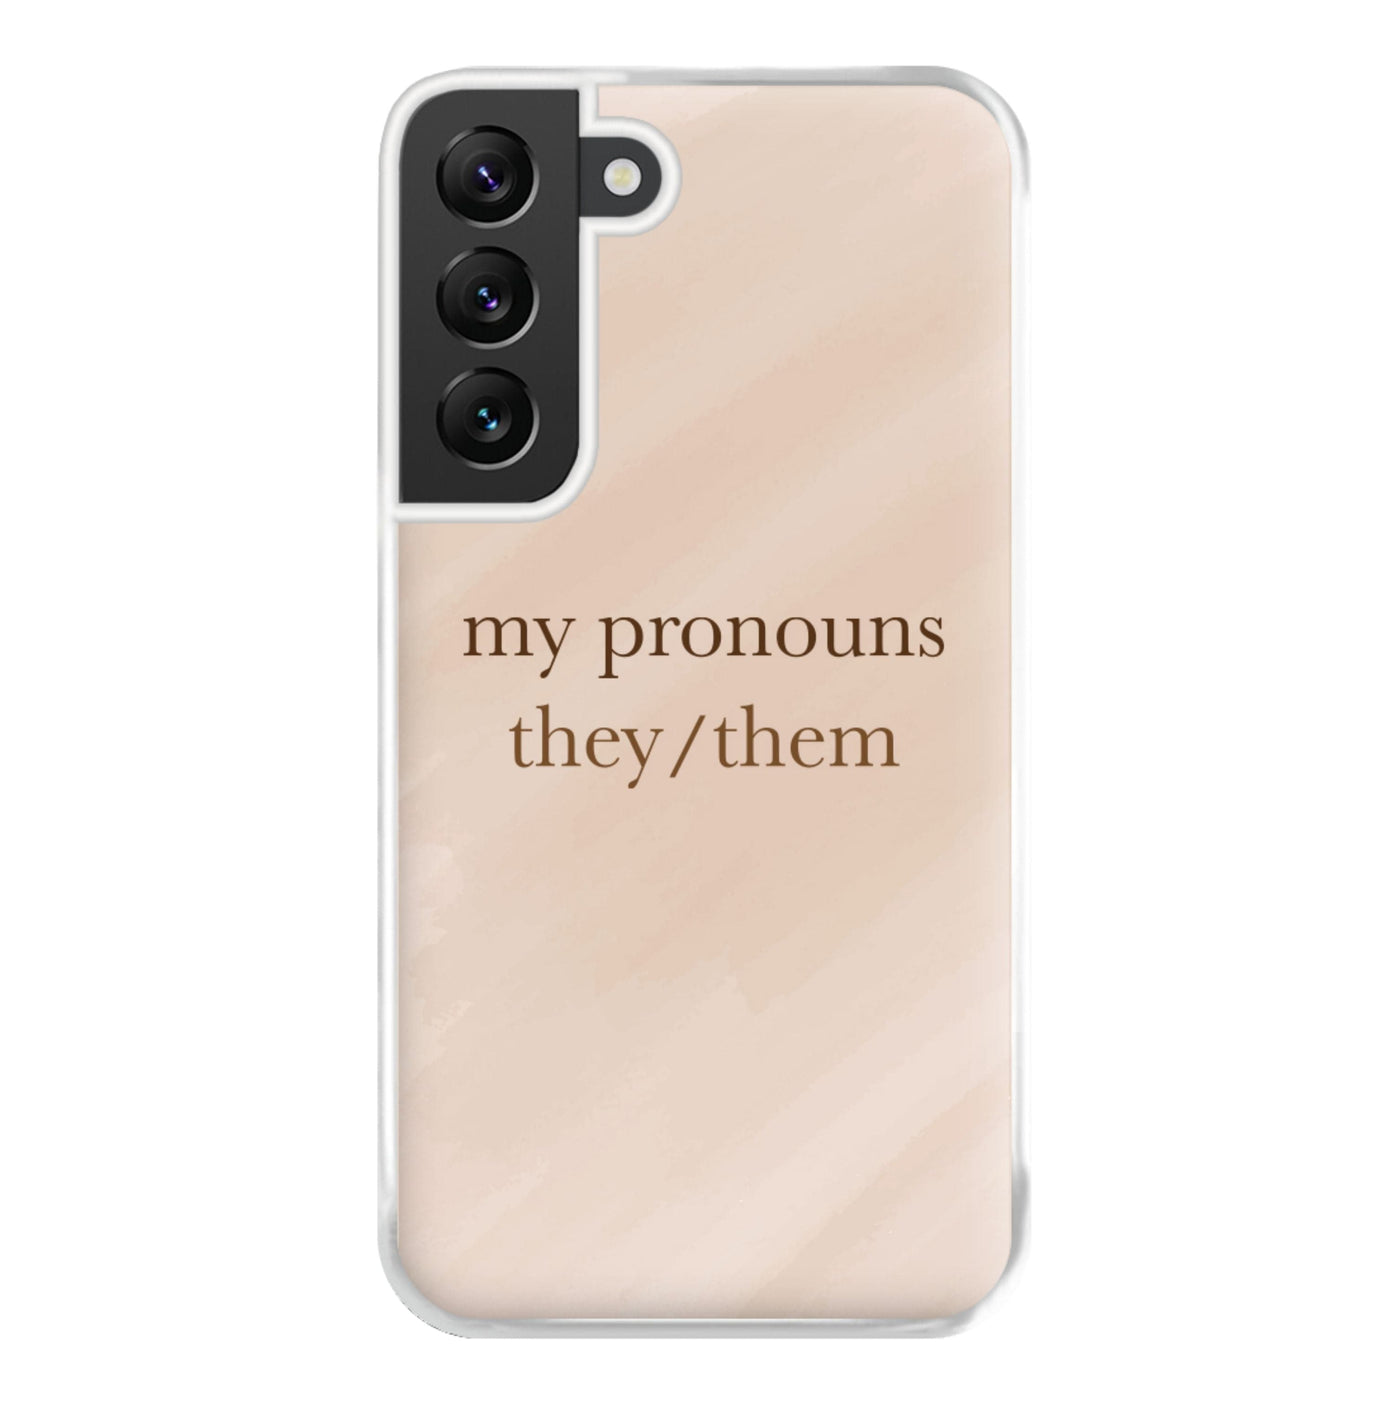 They & Them - Pronouns Phone Case